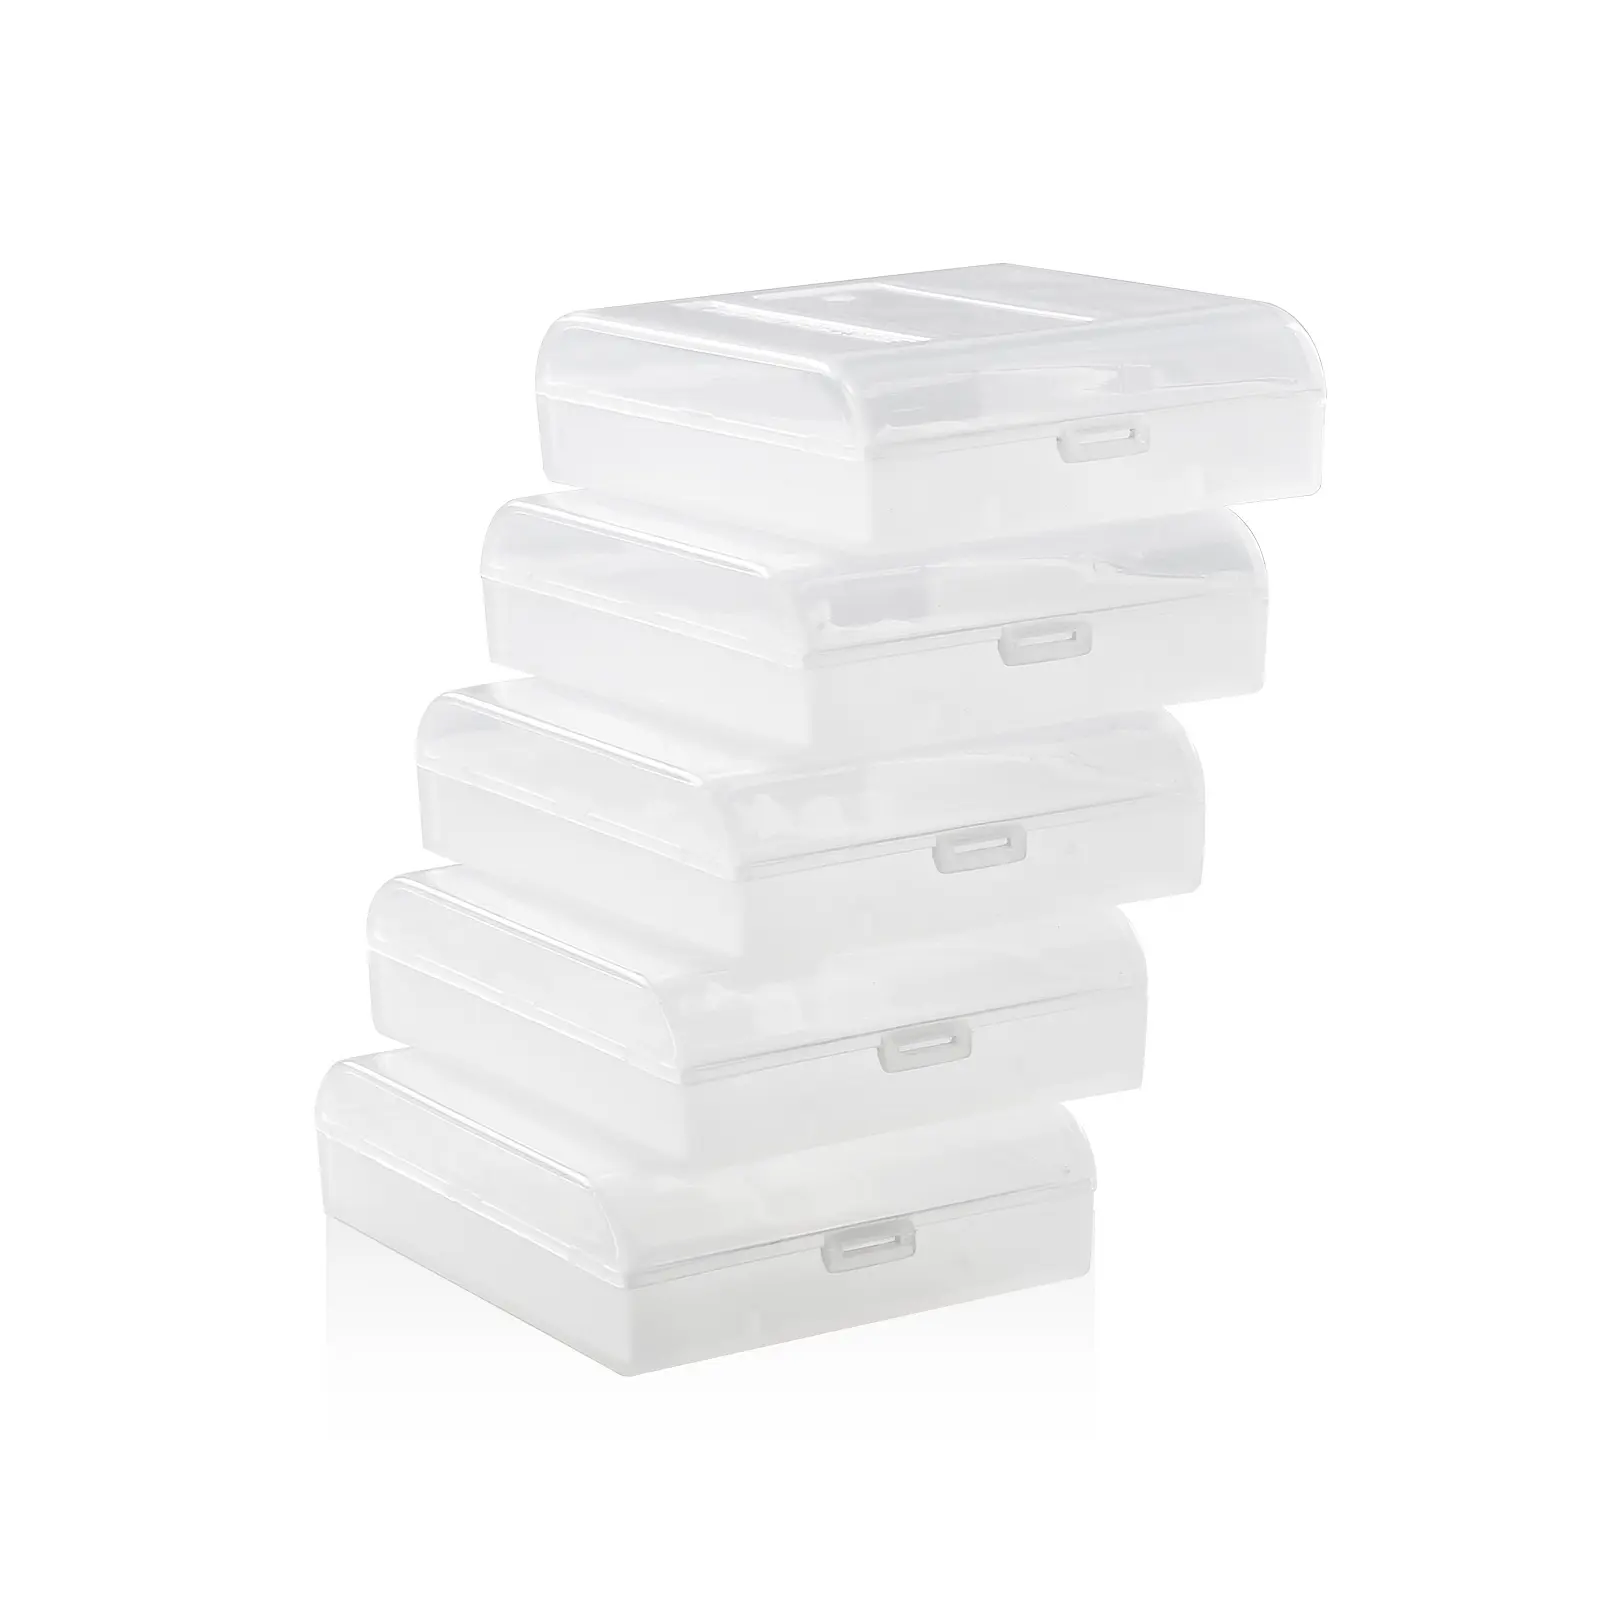 4PCS AAA HR03 10440 Plastic Waterproof Case Battery Storage Box